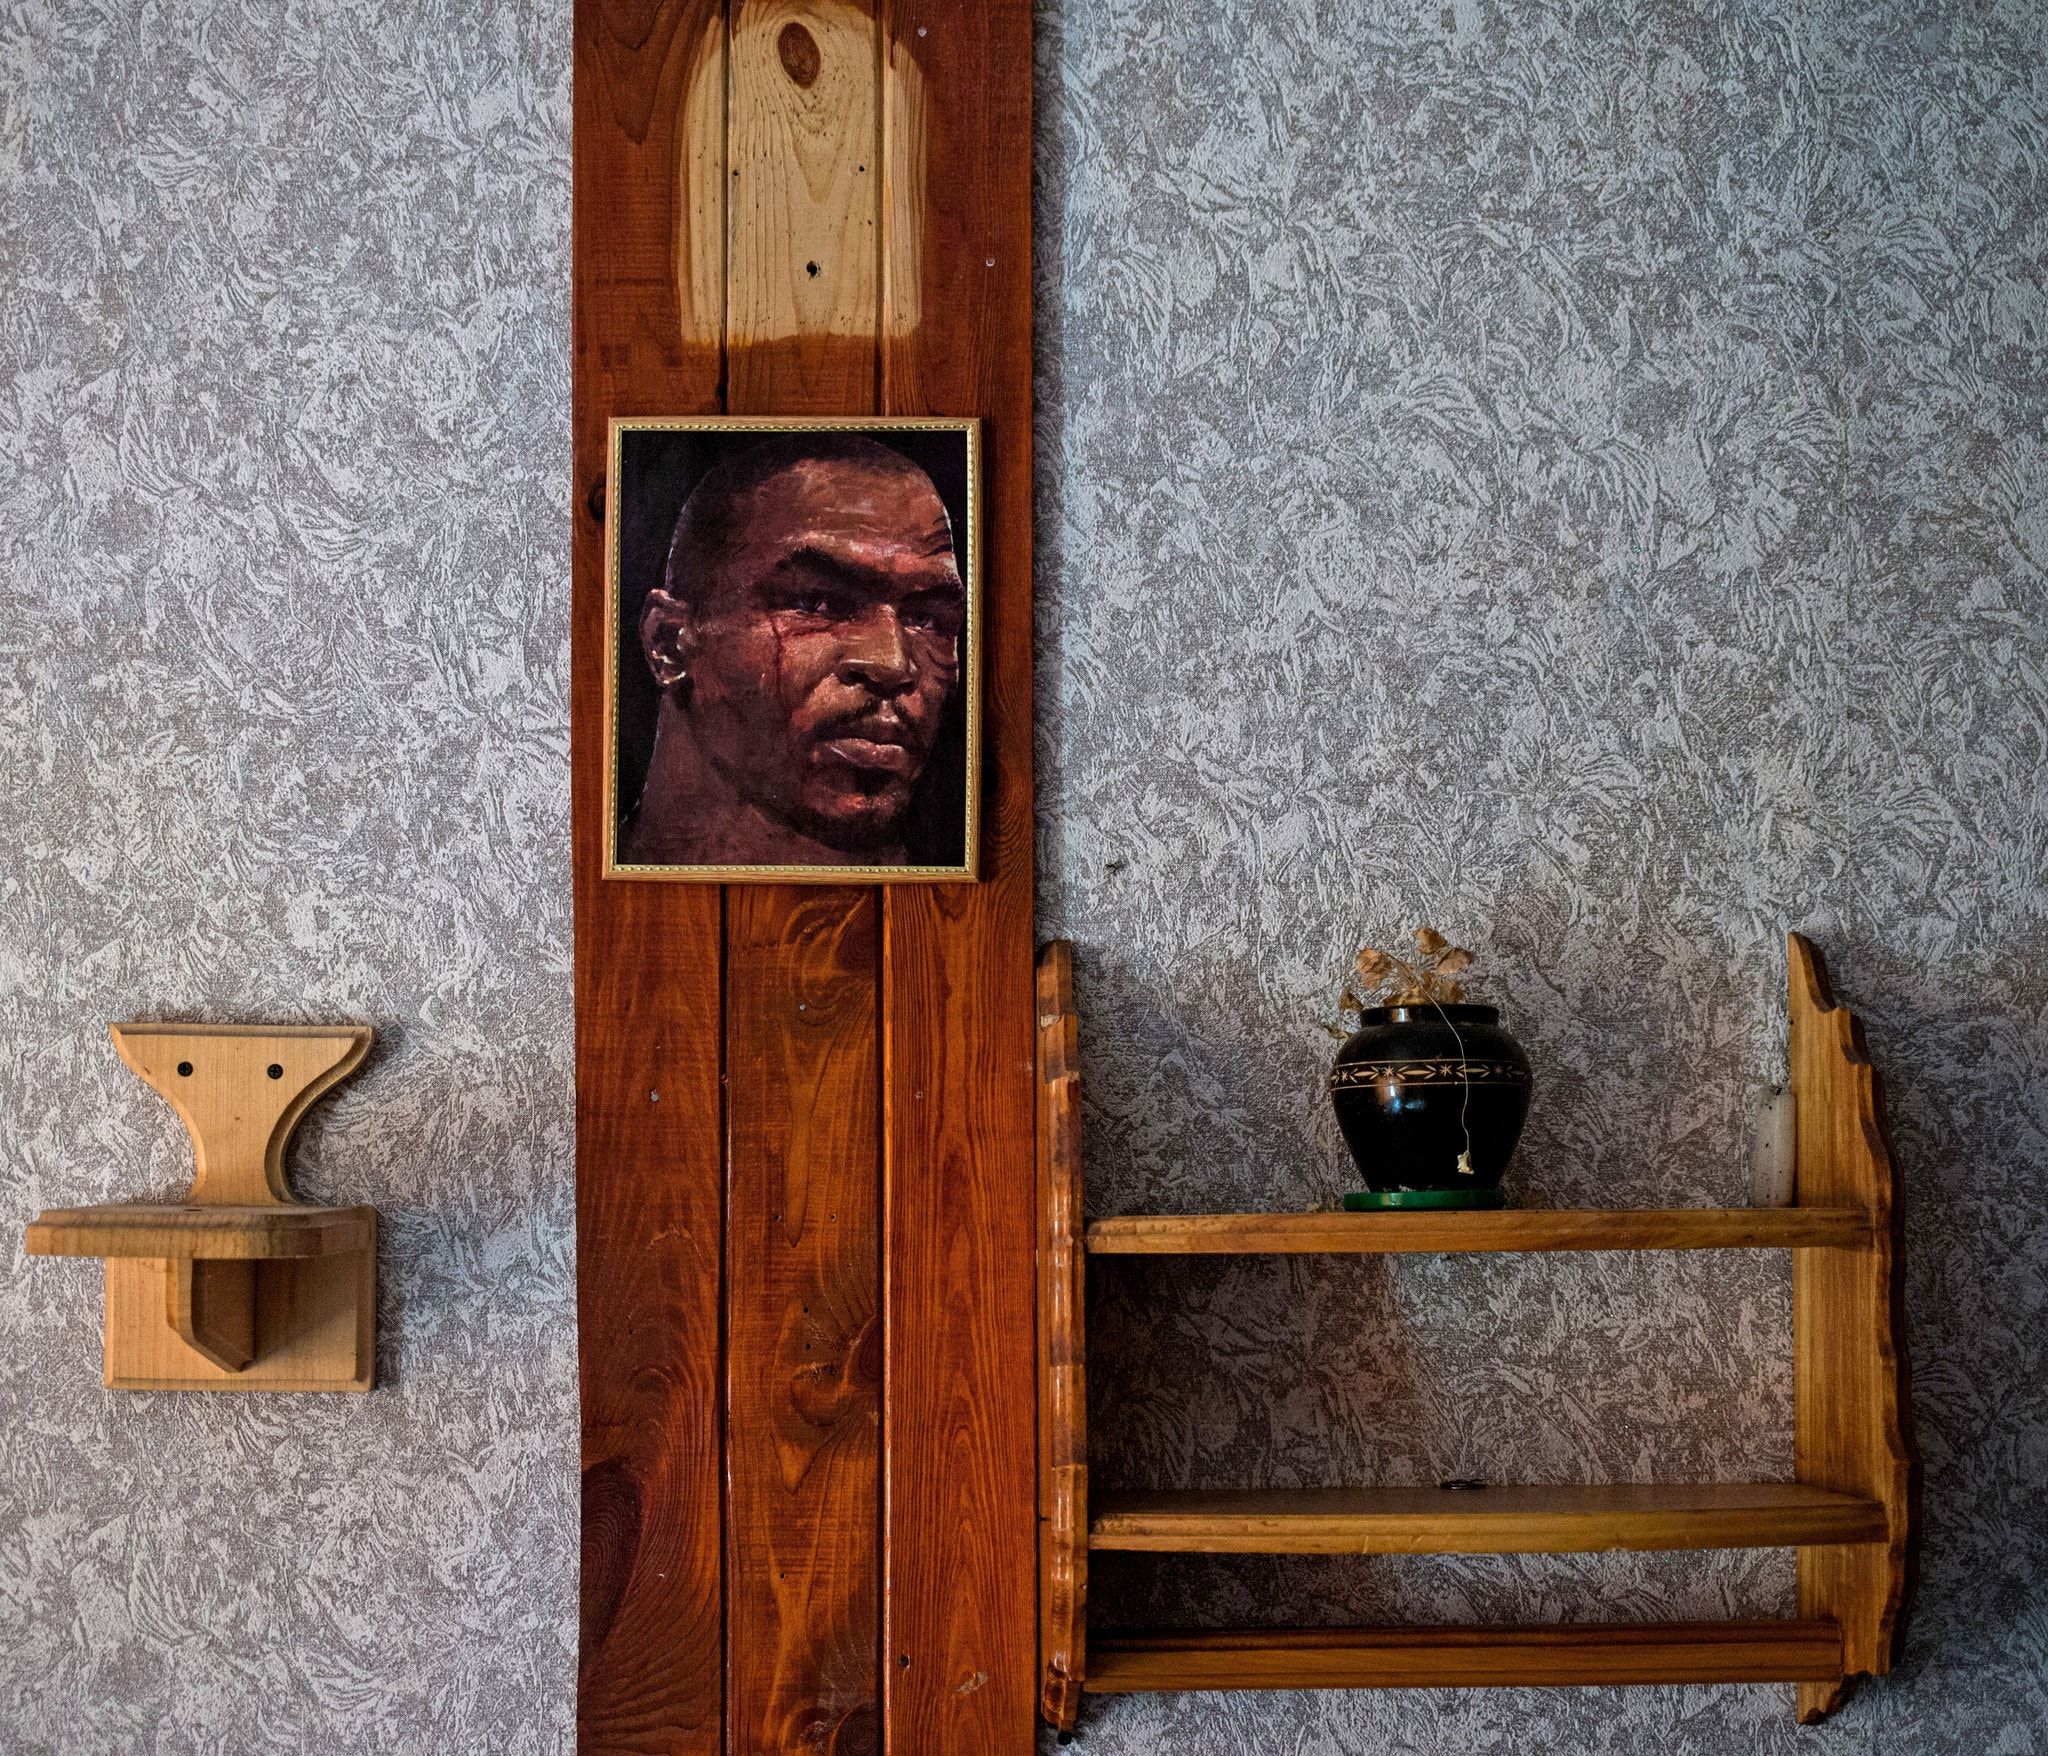 Portrait of Mike Tyson at a men’s prison in Chernigov. Image by Misha Friedman. Ukraine, undated.
